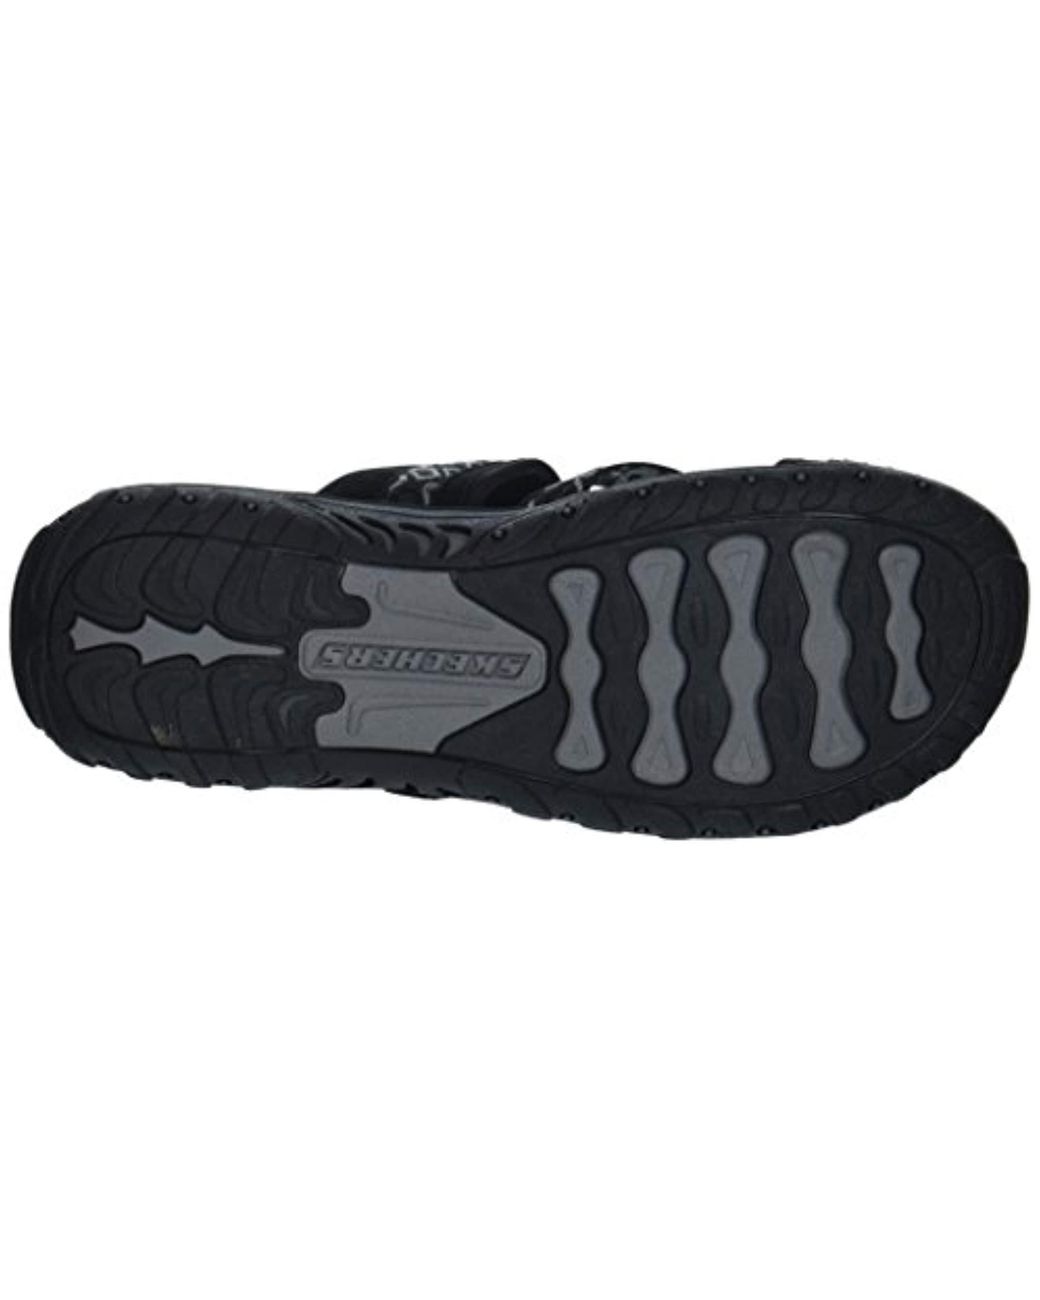 Skechers Reggae-Trailway Flip-slop Sandals Flop in Black/Gray (Black) | Lyst